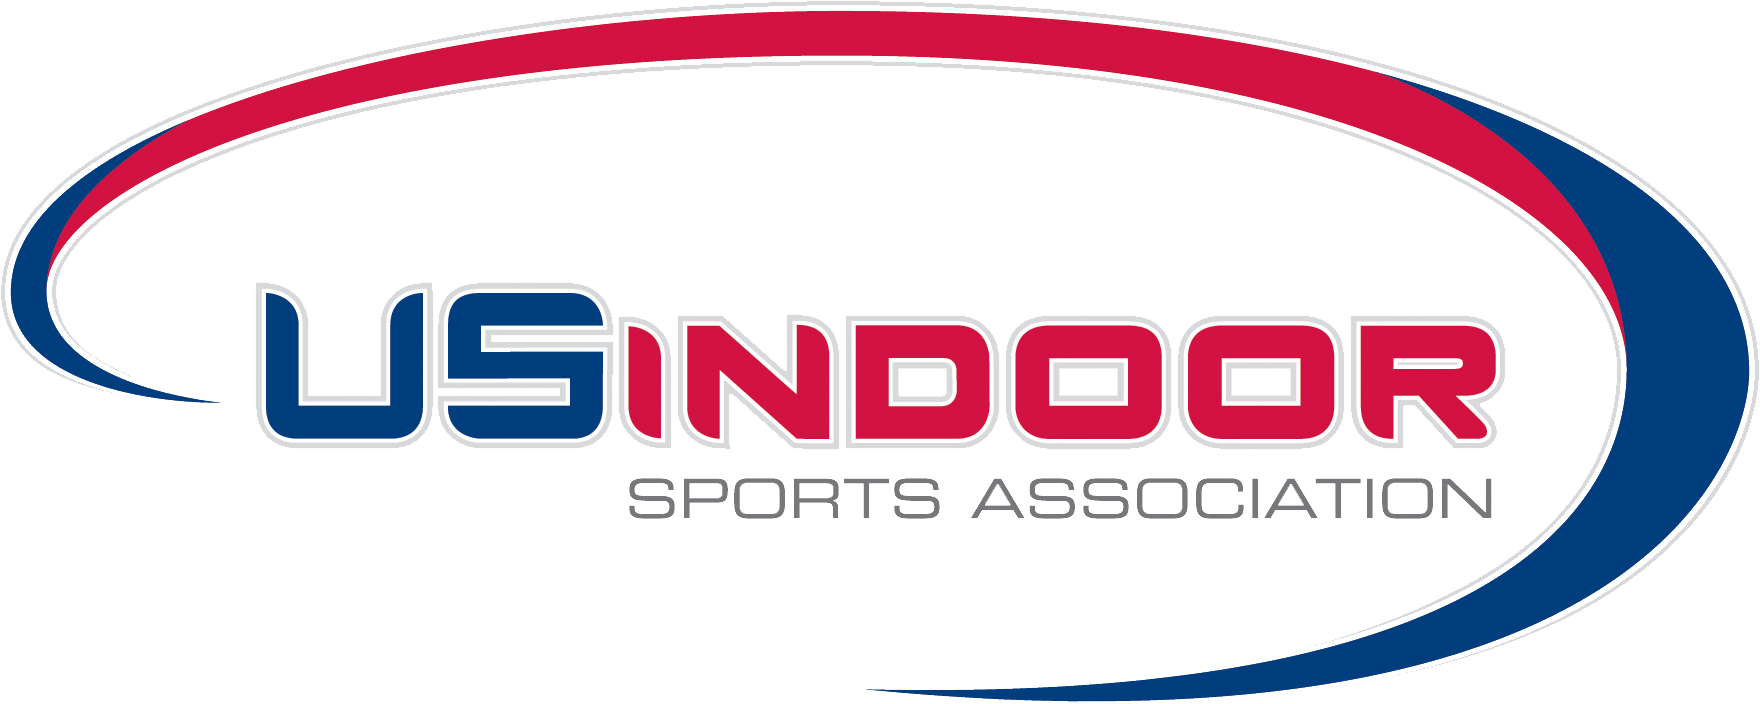 Sports Association Logo - USIndoor Sports Association – Home for Indoor Sports Facility Operators